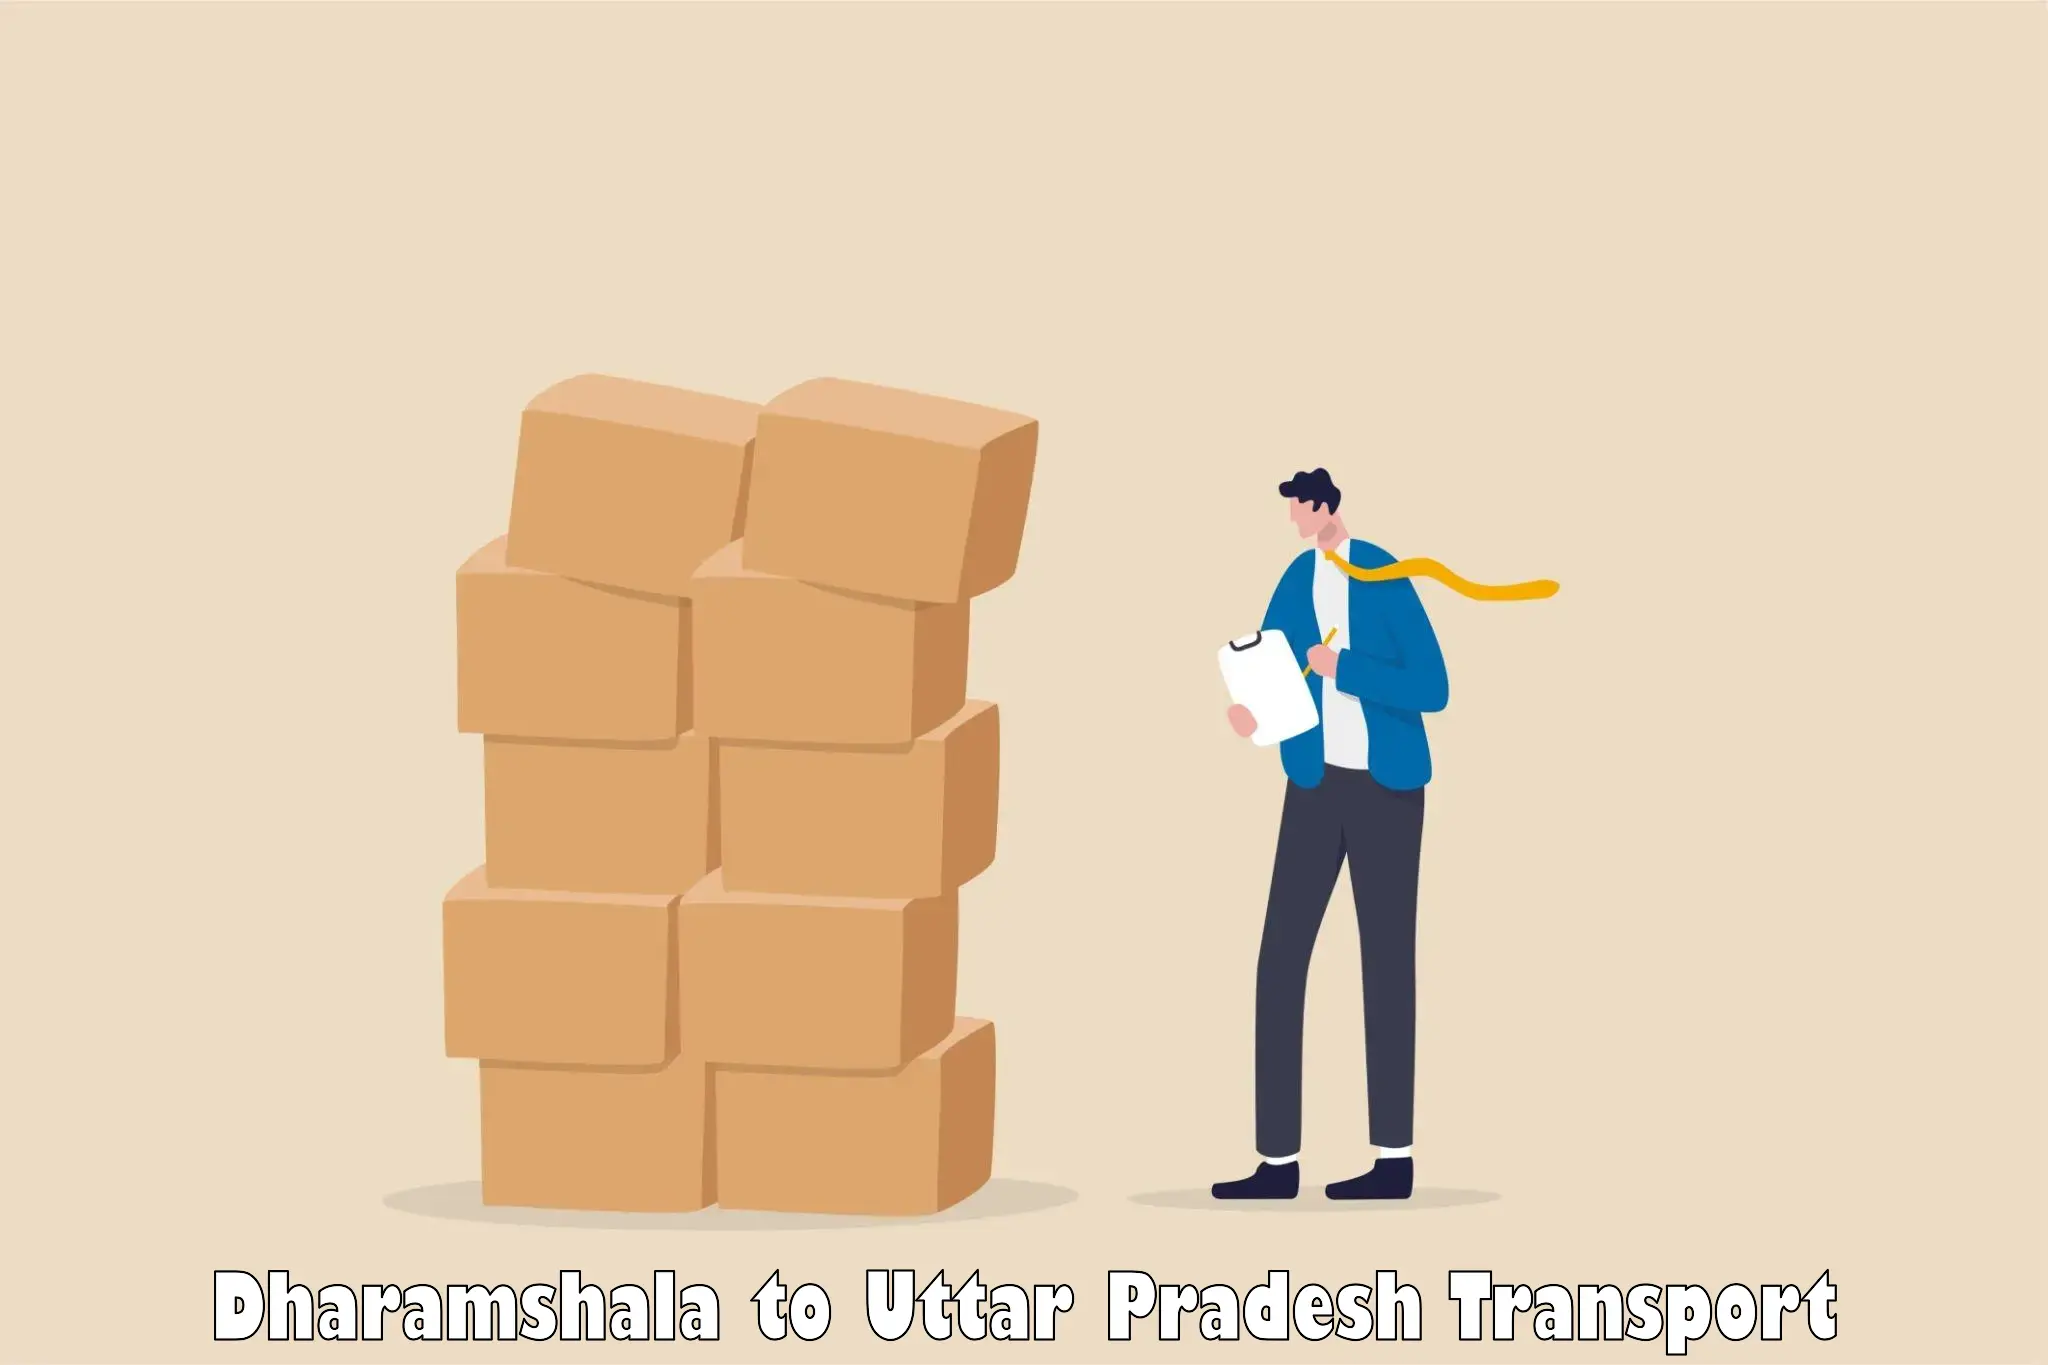 Transport in sharing Dharamshala to Harraiya